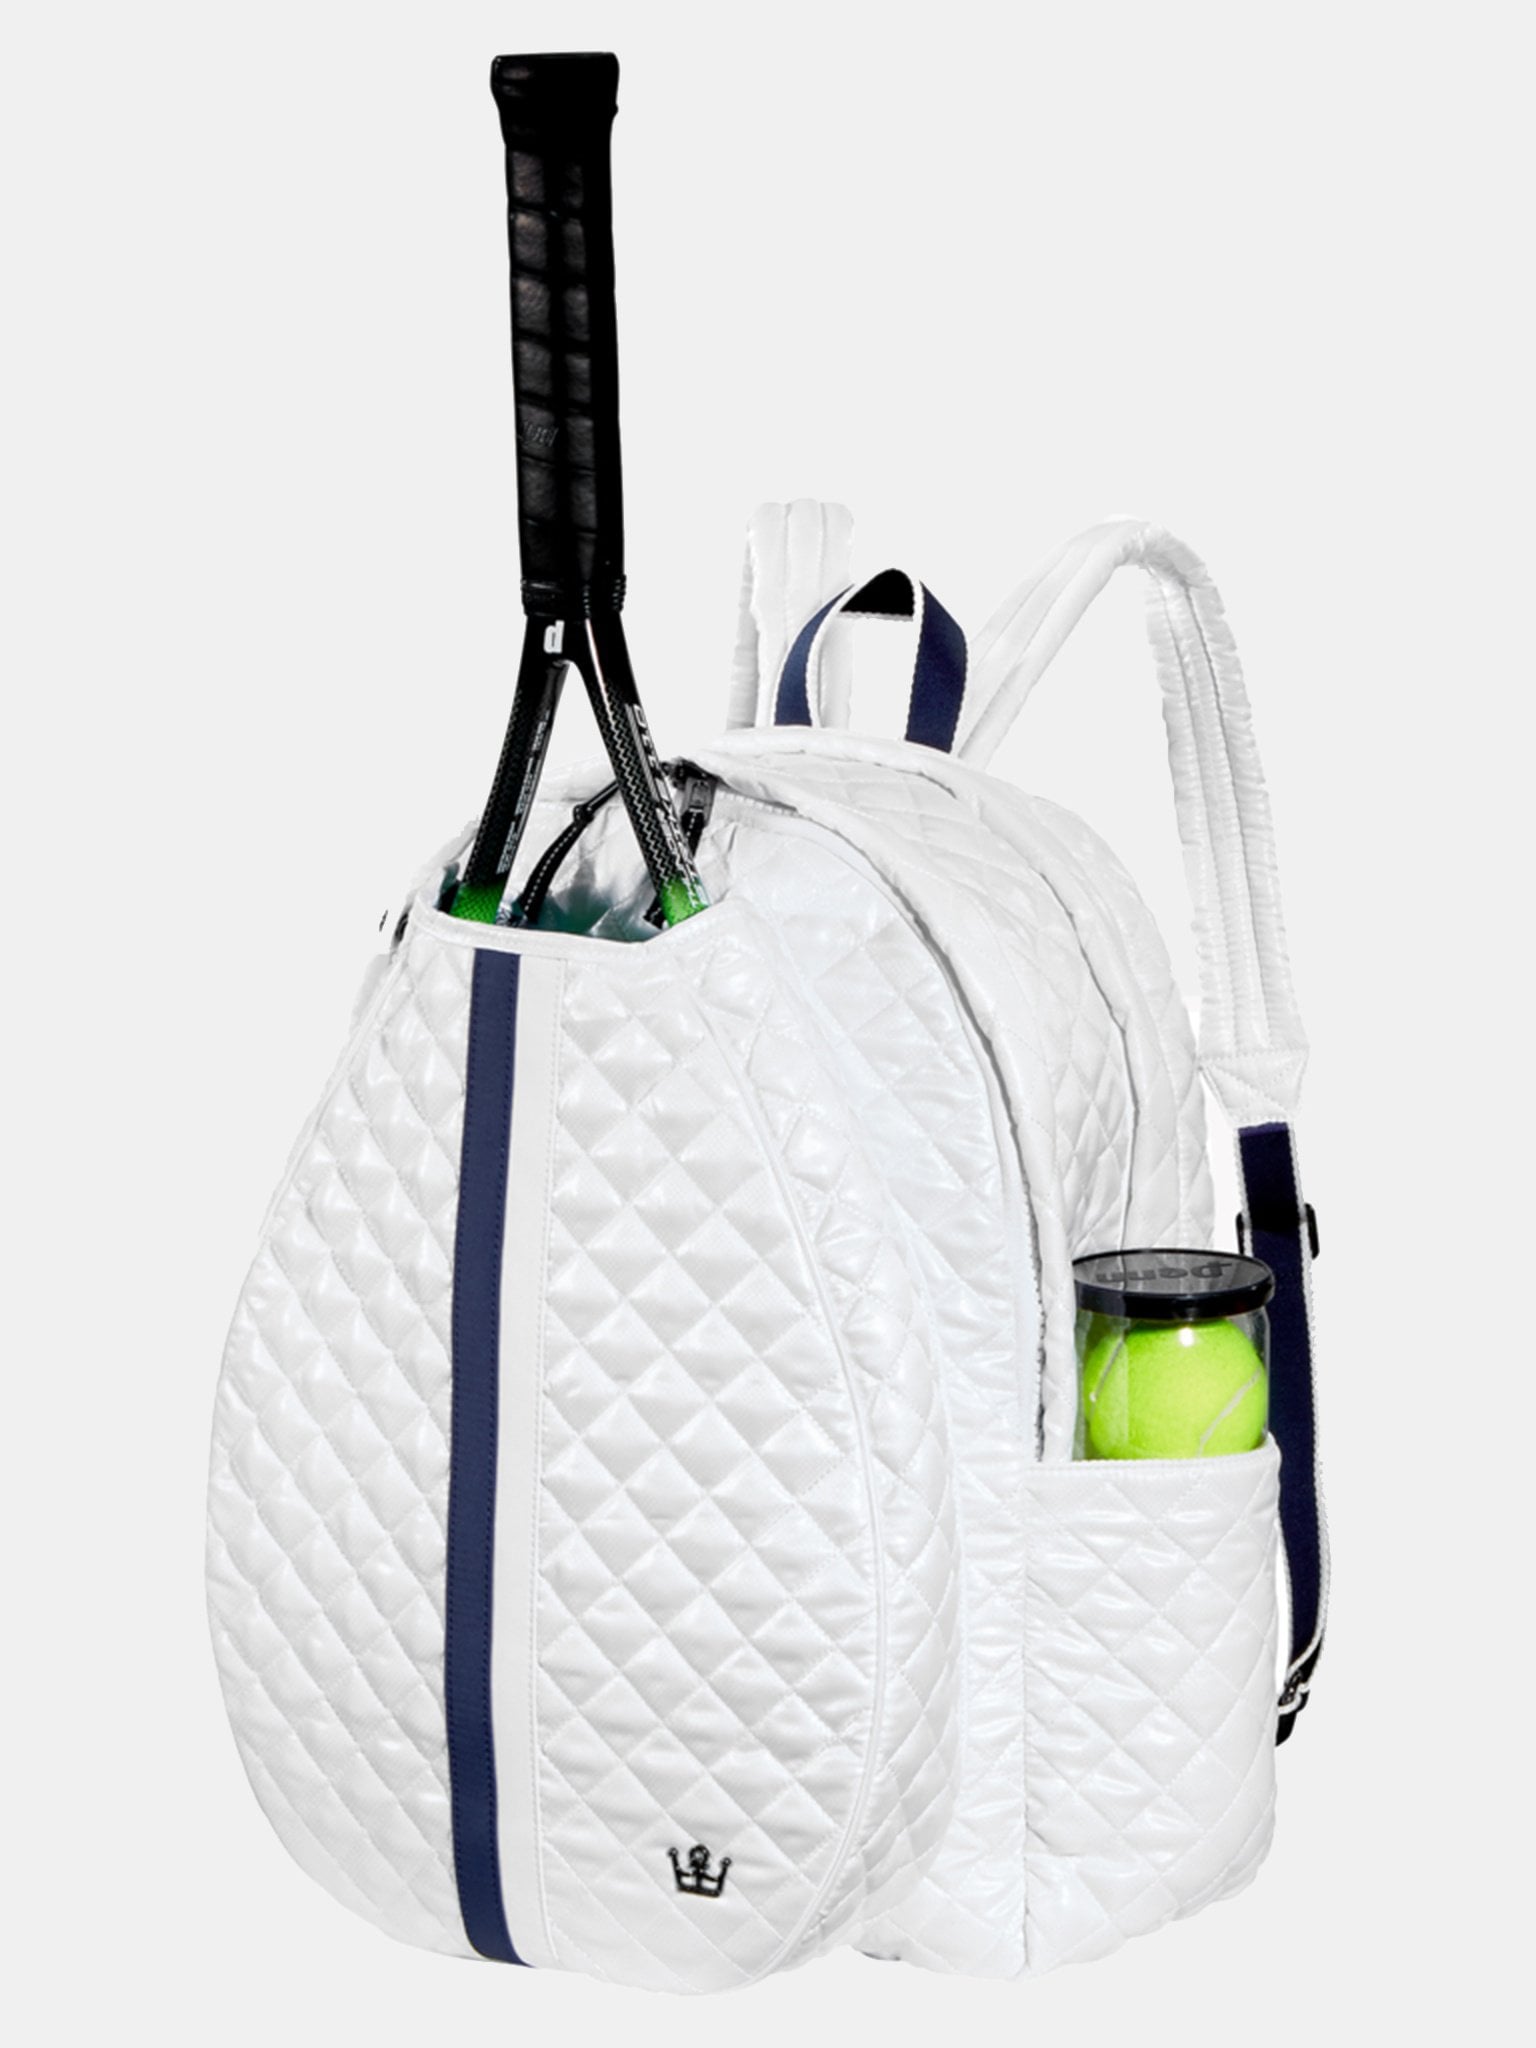 Luxury Tennis Bags, Tennis Racquet Bags, Totes & Backpacks